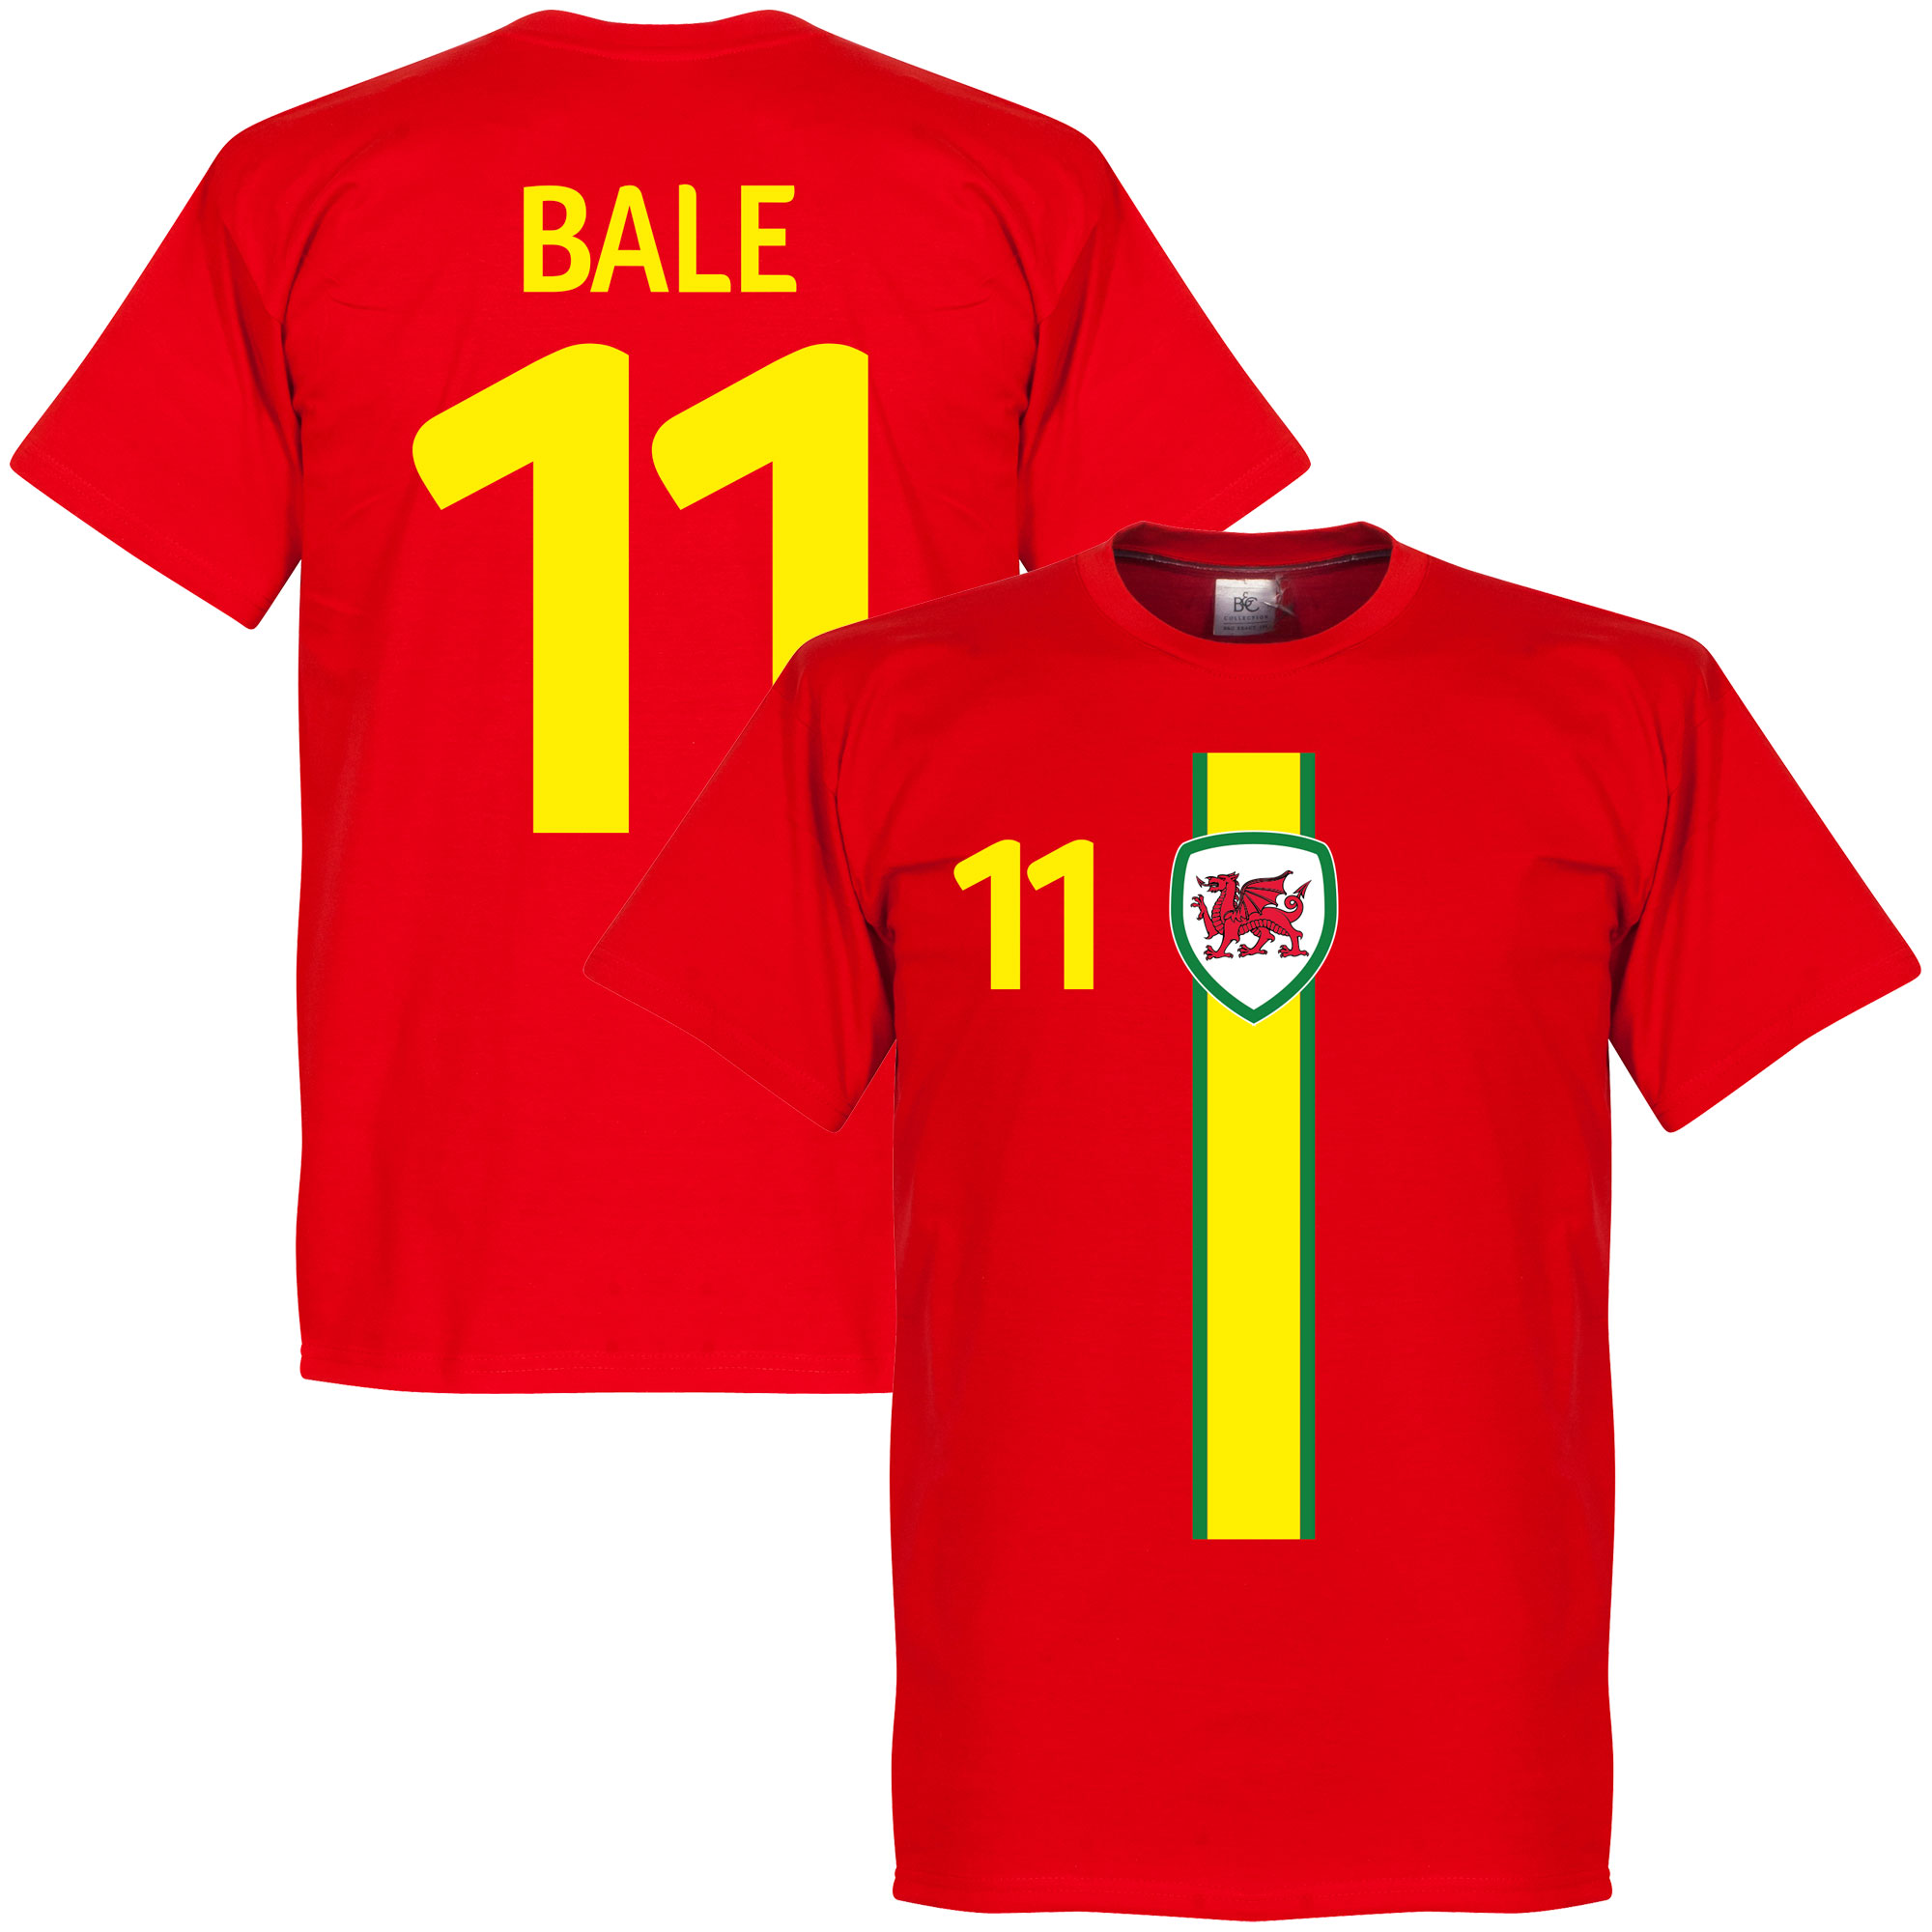 Wales Bale T-Shirt XXXL